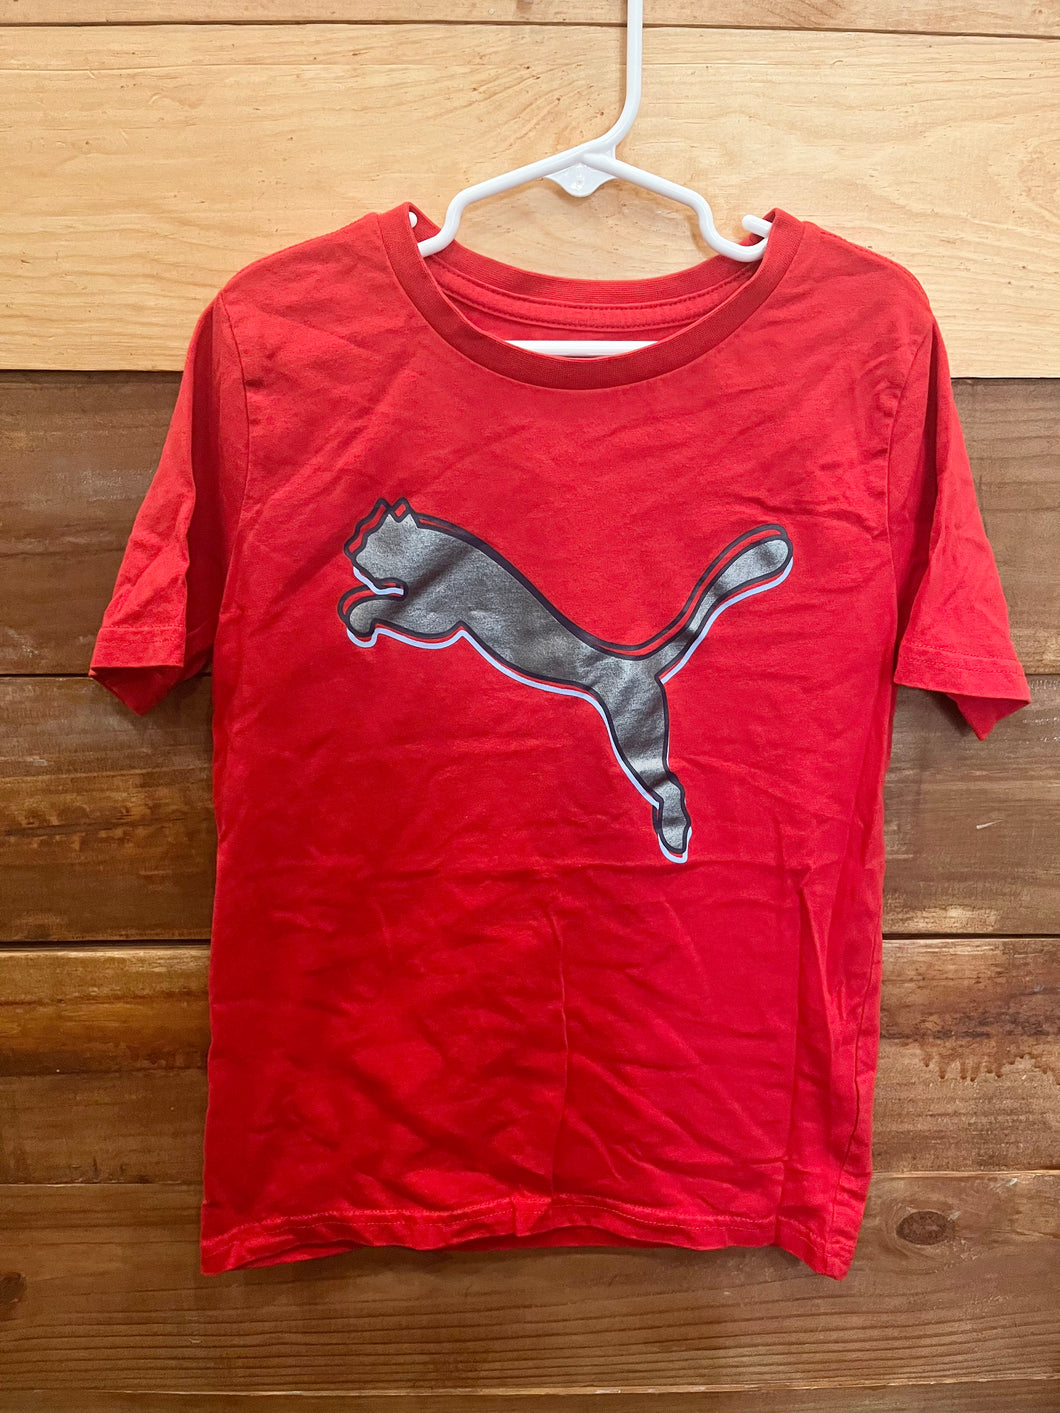 Puma Red Shirt Size 8